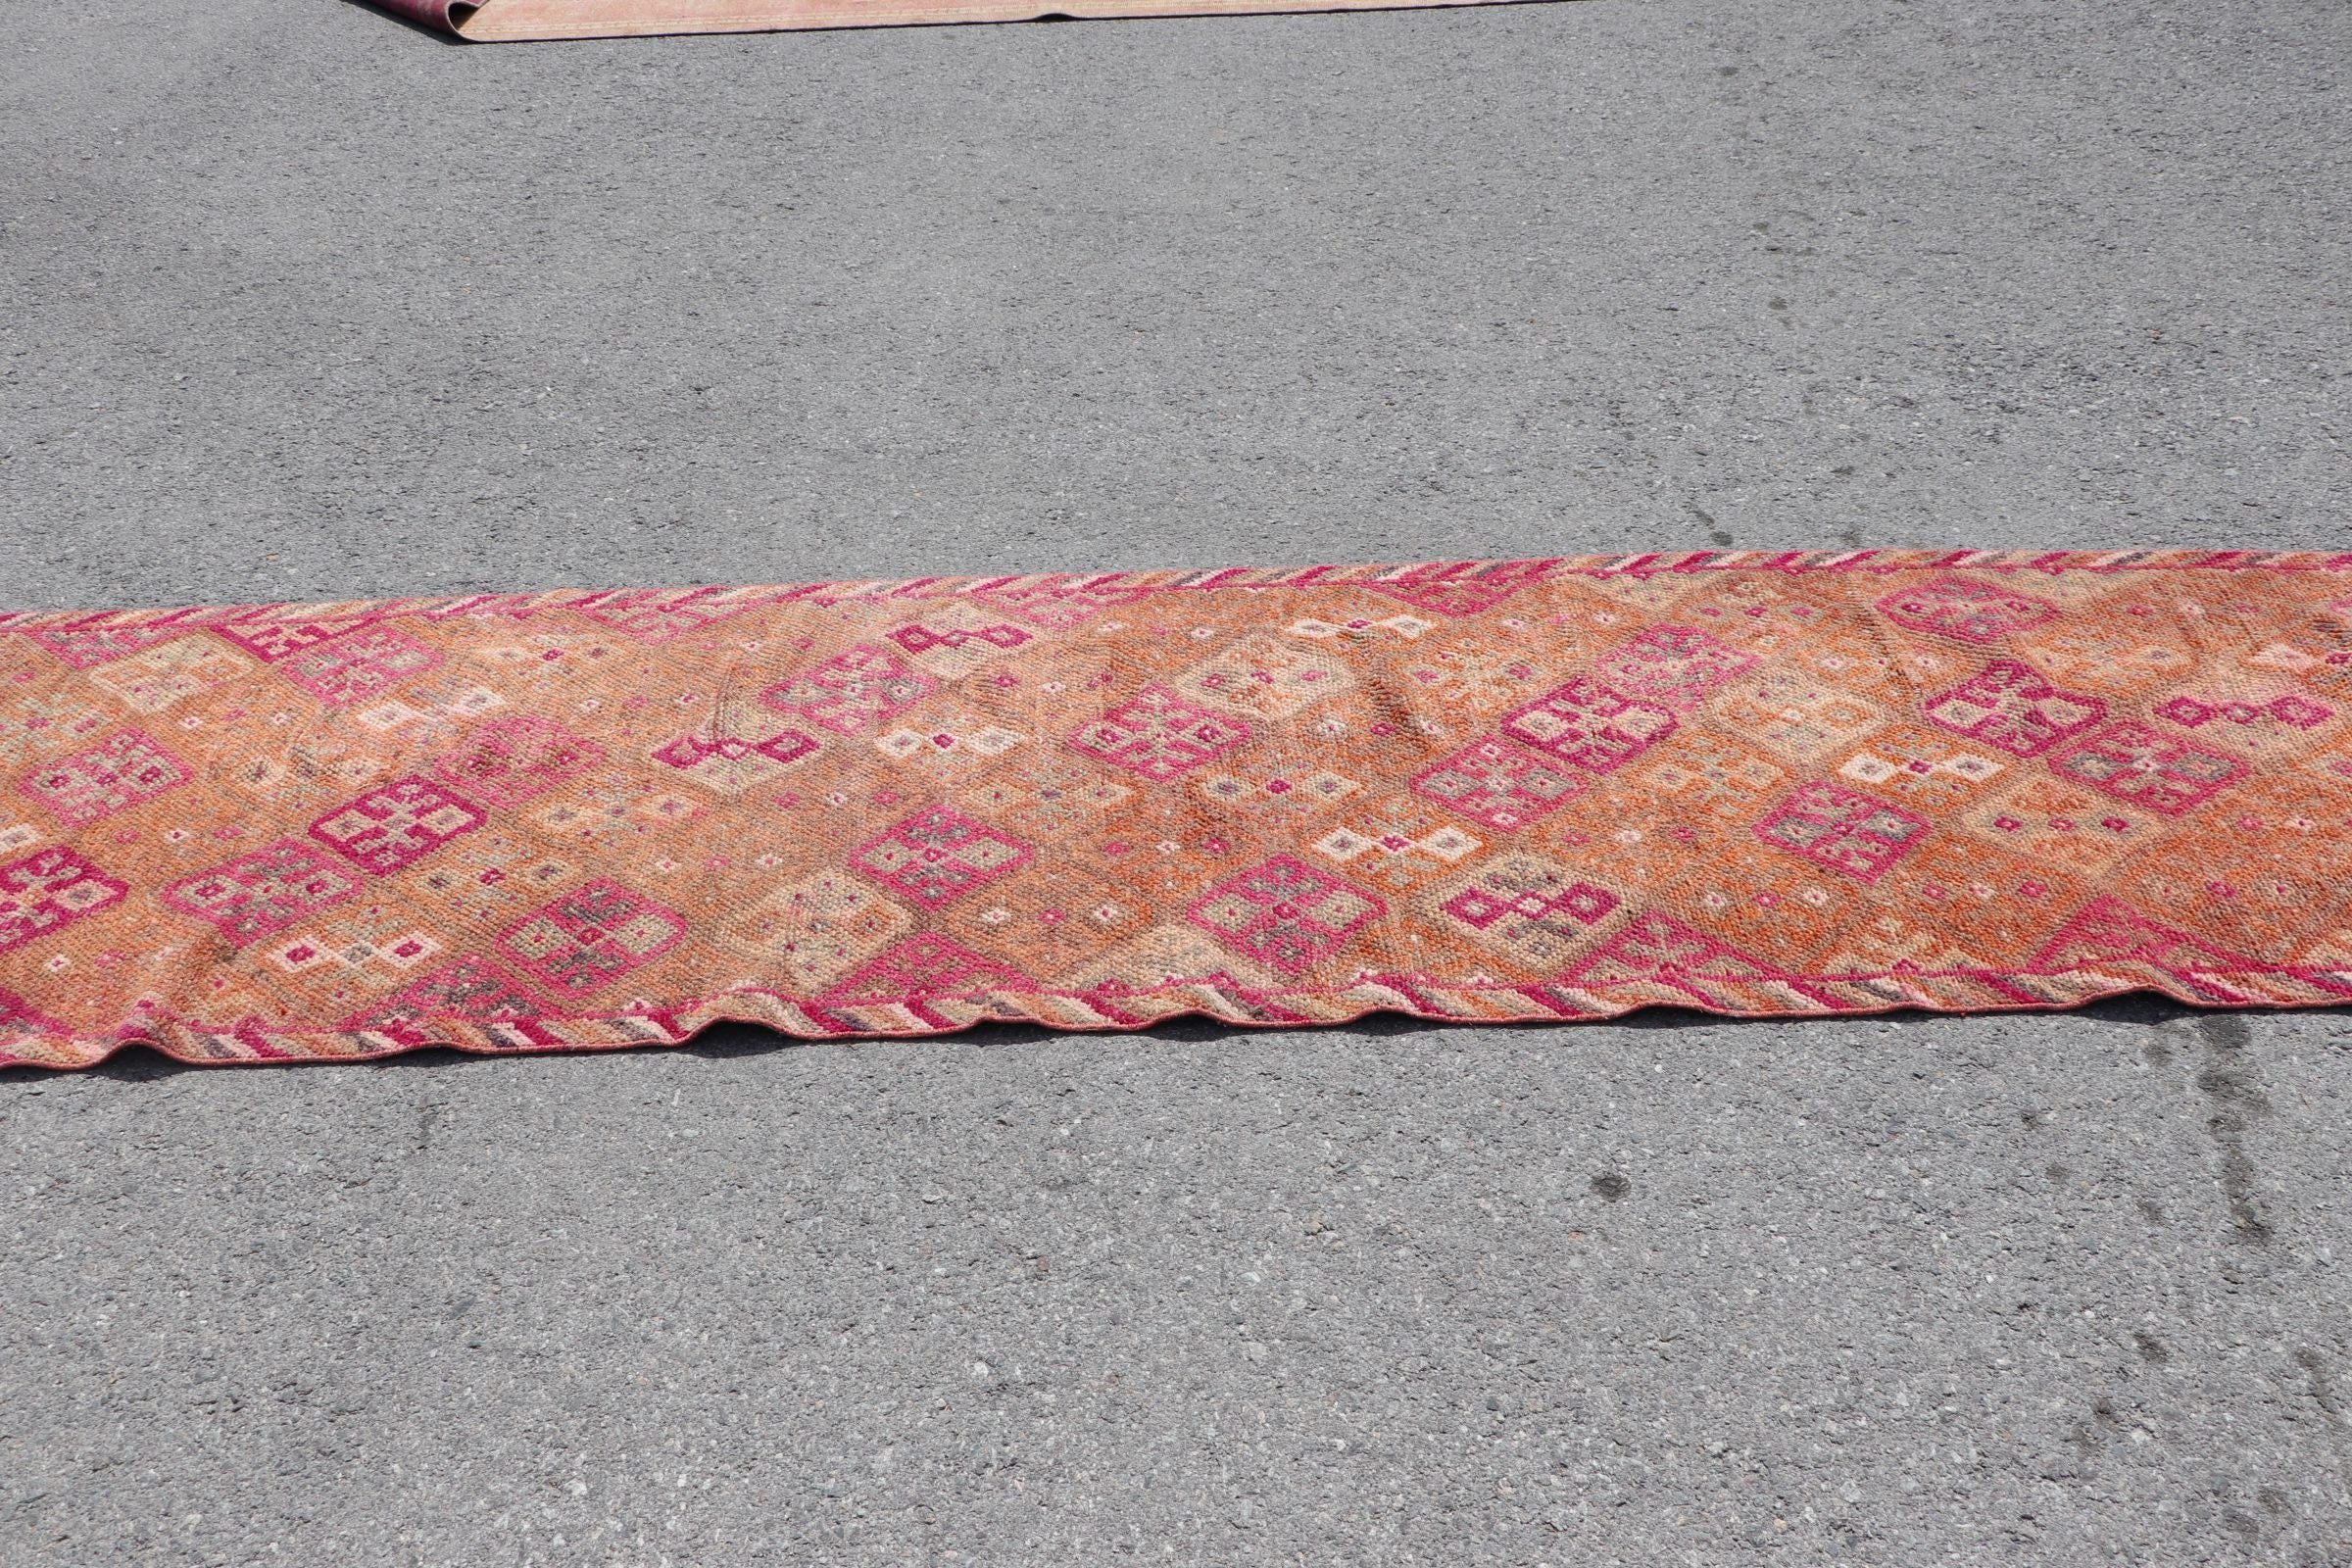 Vintage Rug, Antique Rug, Rugs for Runner, Anatolian Rugs, Pink Kitchen Rug, Corridor Rug, Cute Rugs, Turkish Rugs, 2.7x11.8 ft Runner Rug